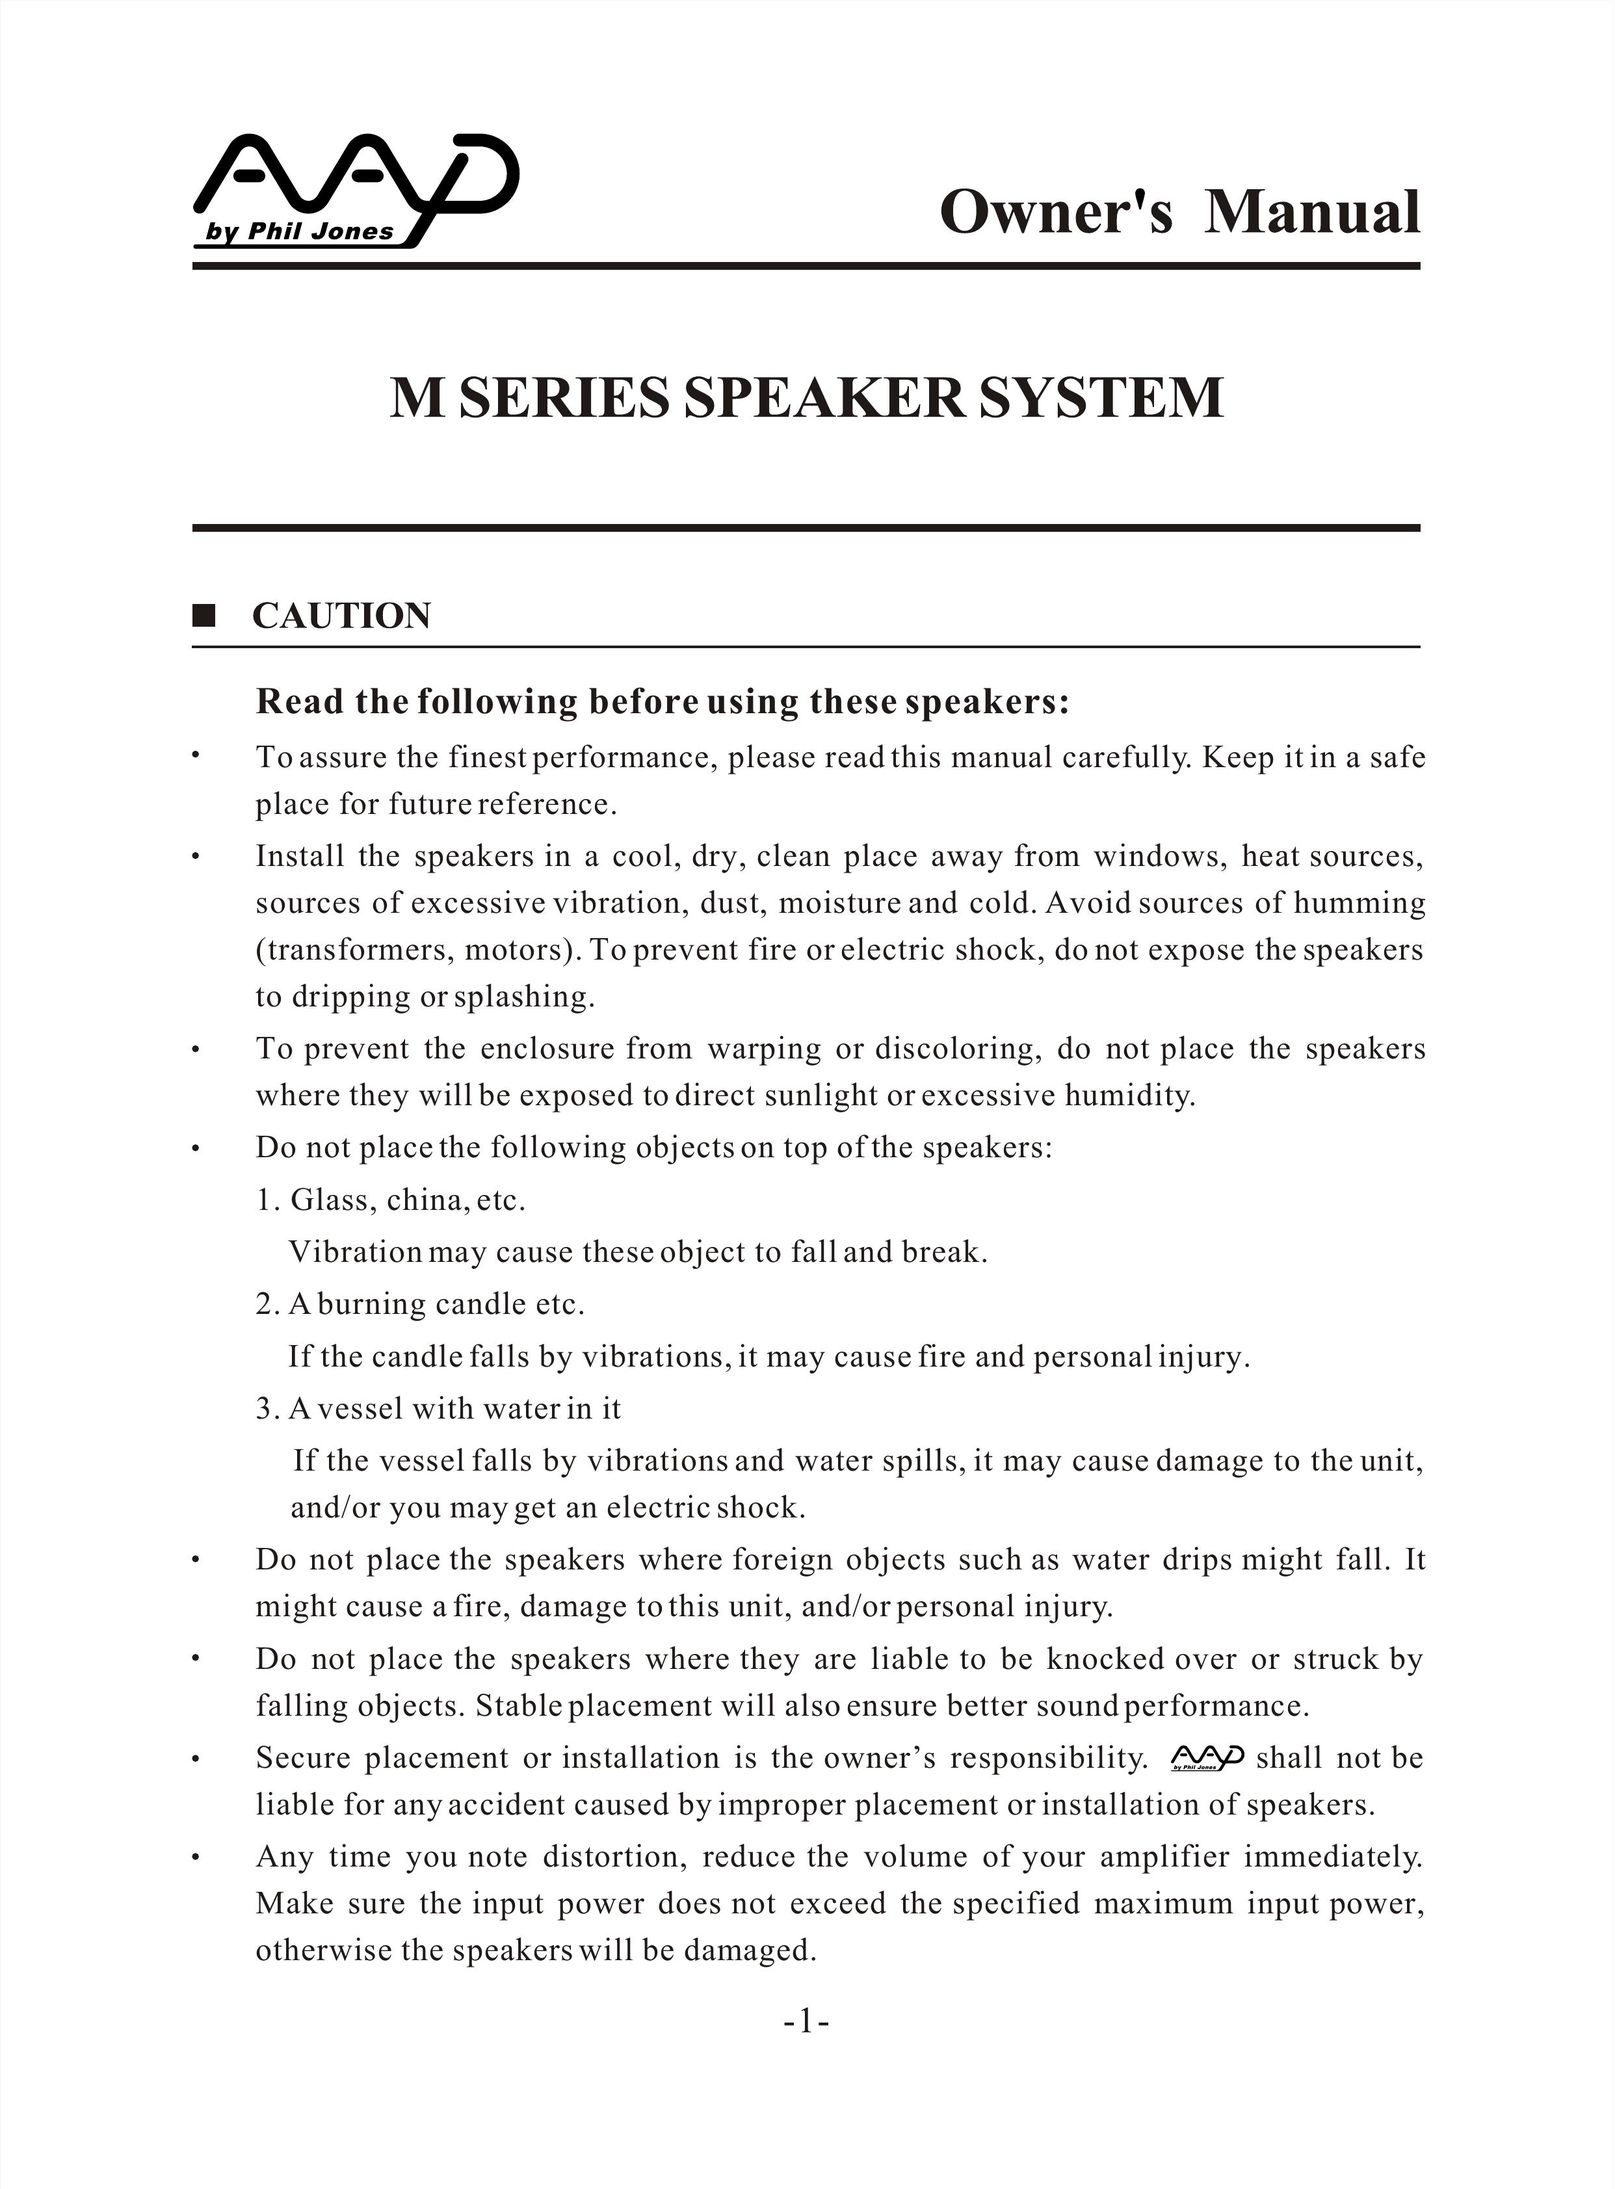 American Acoustic Development M Series Speaker System User Manual